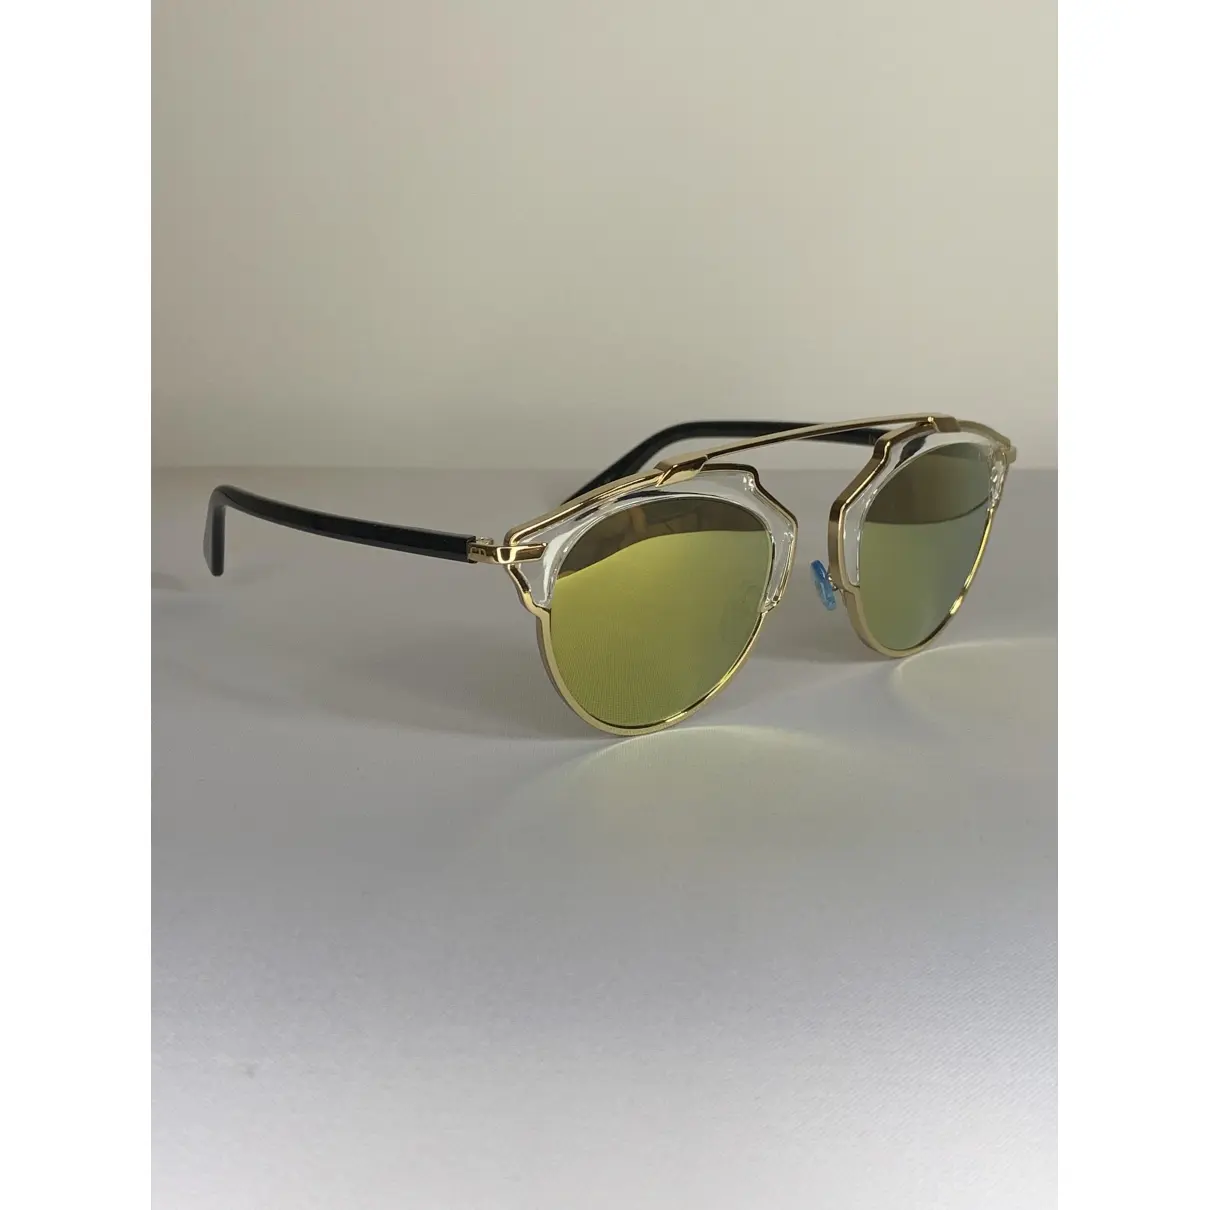 Buy Dior So Real aviator sunglasses online